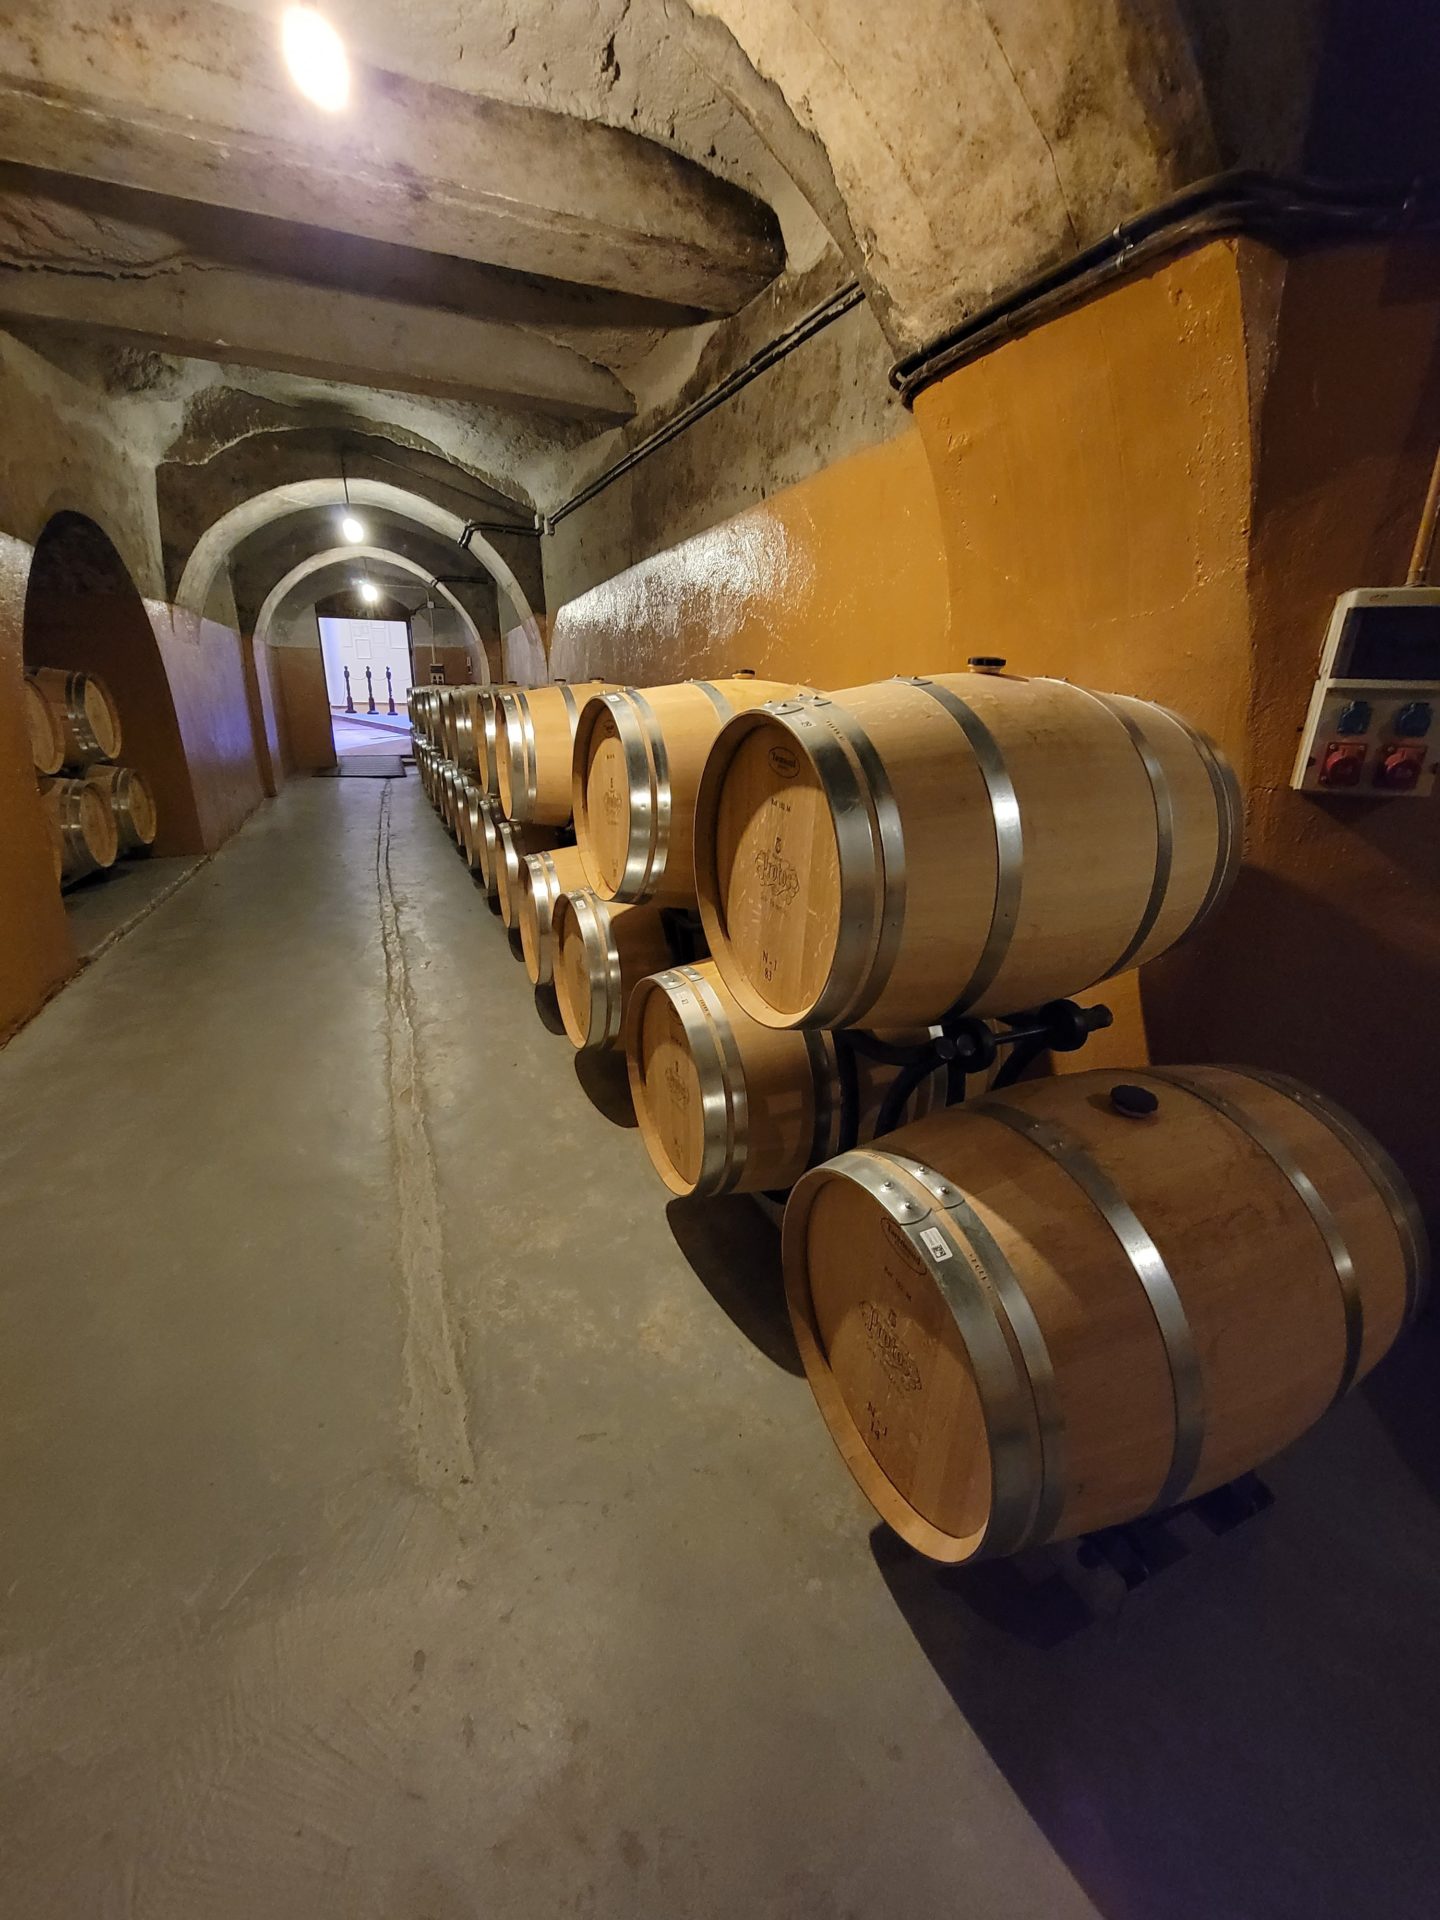 a row of barrels in a cellar